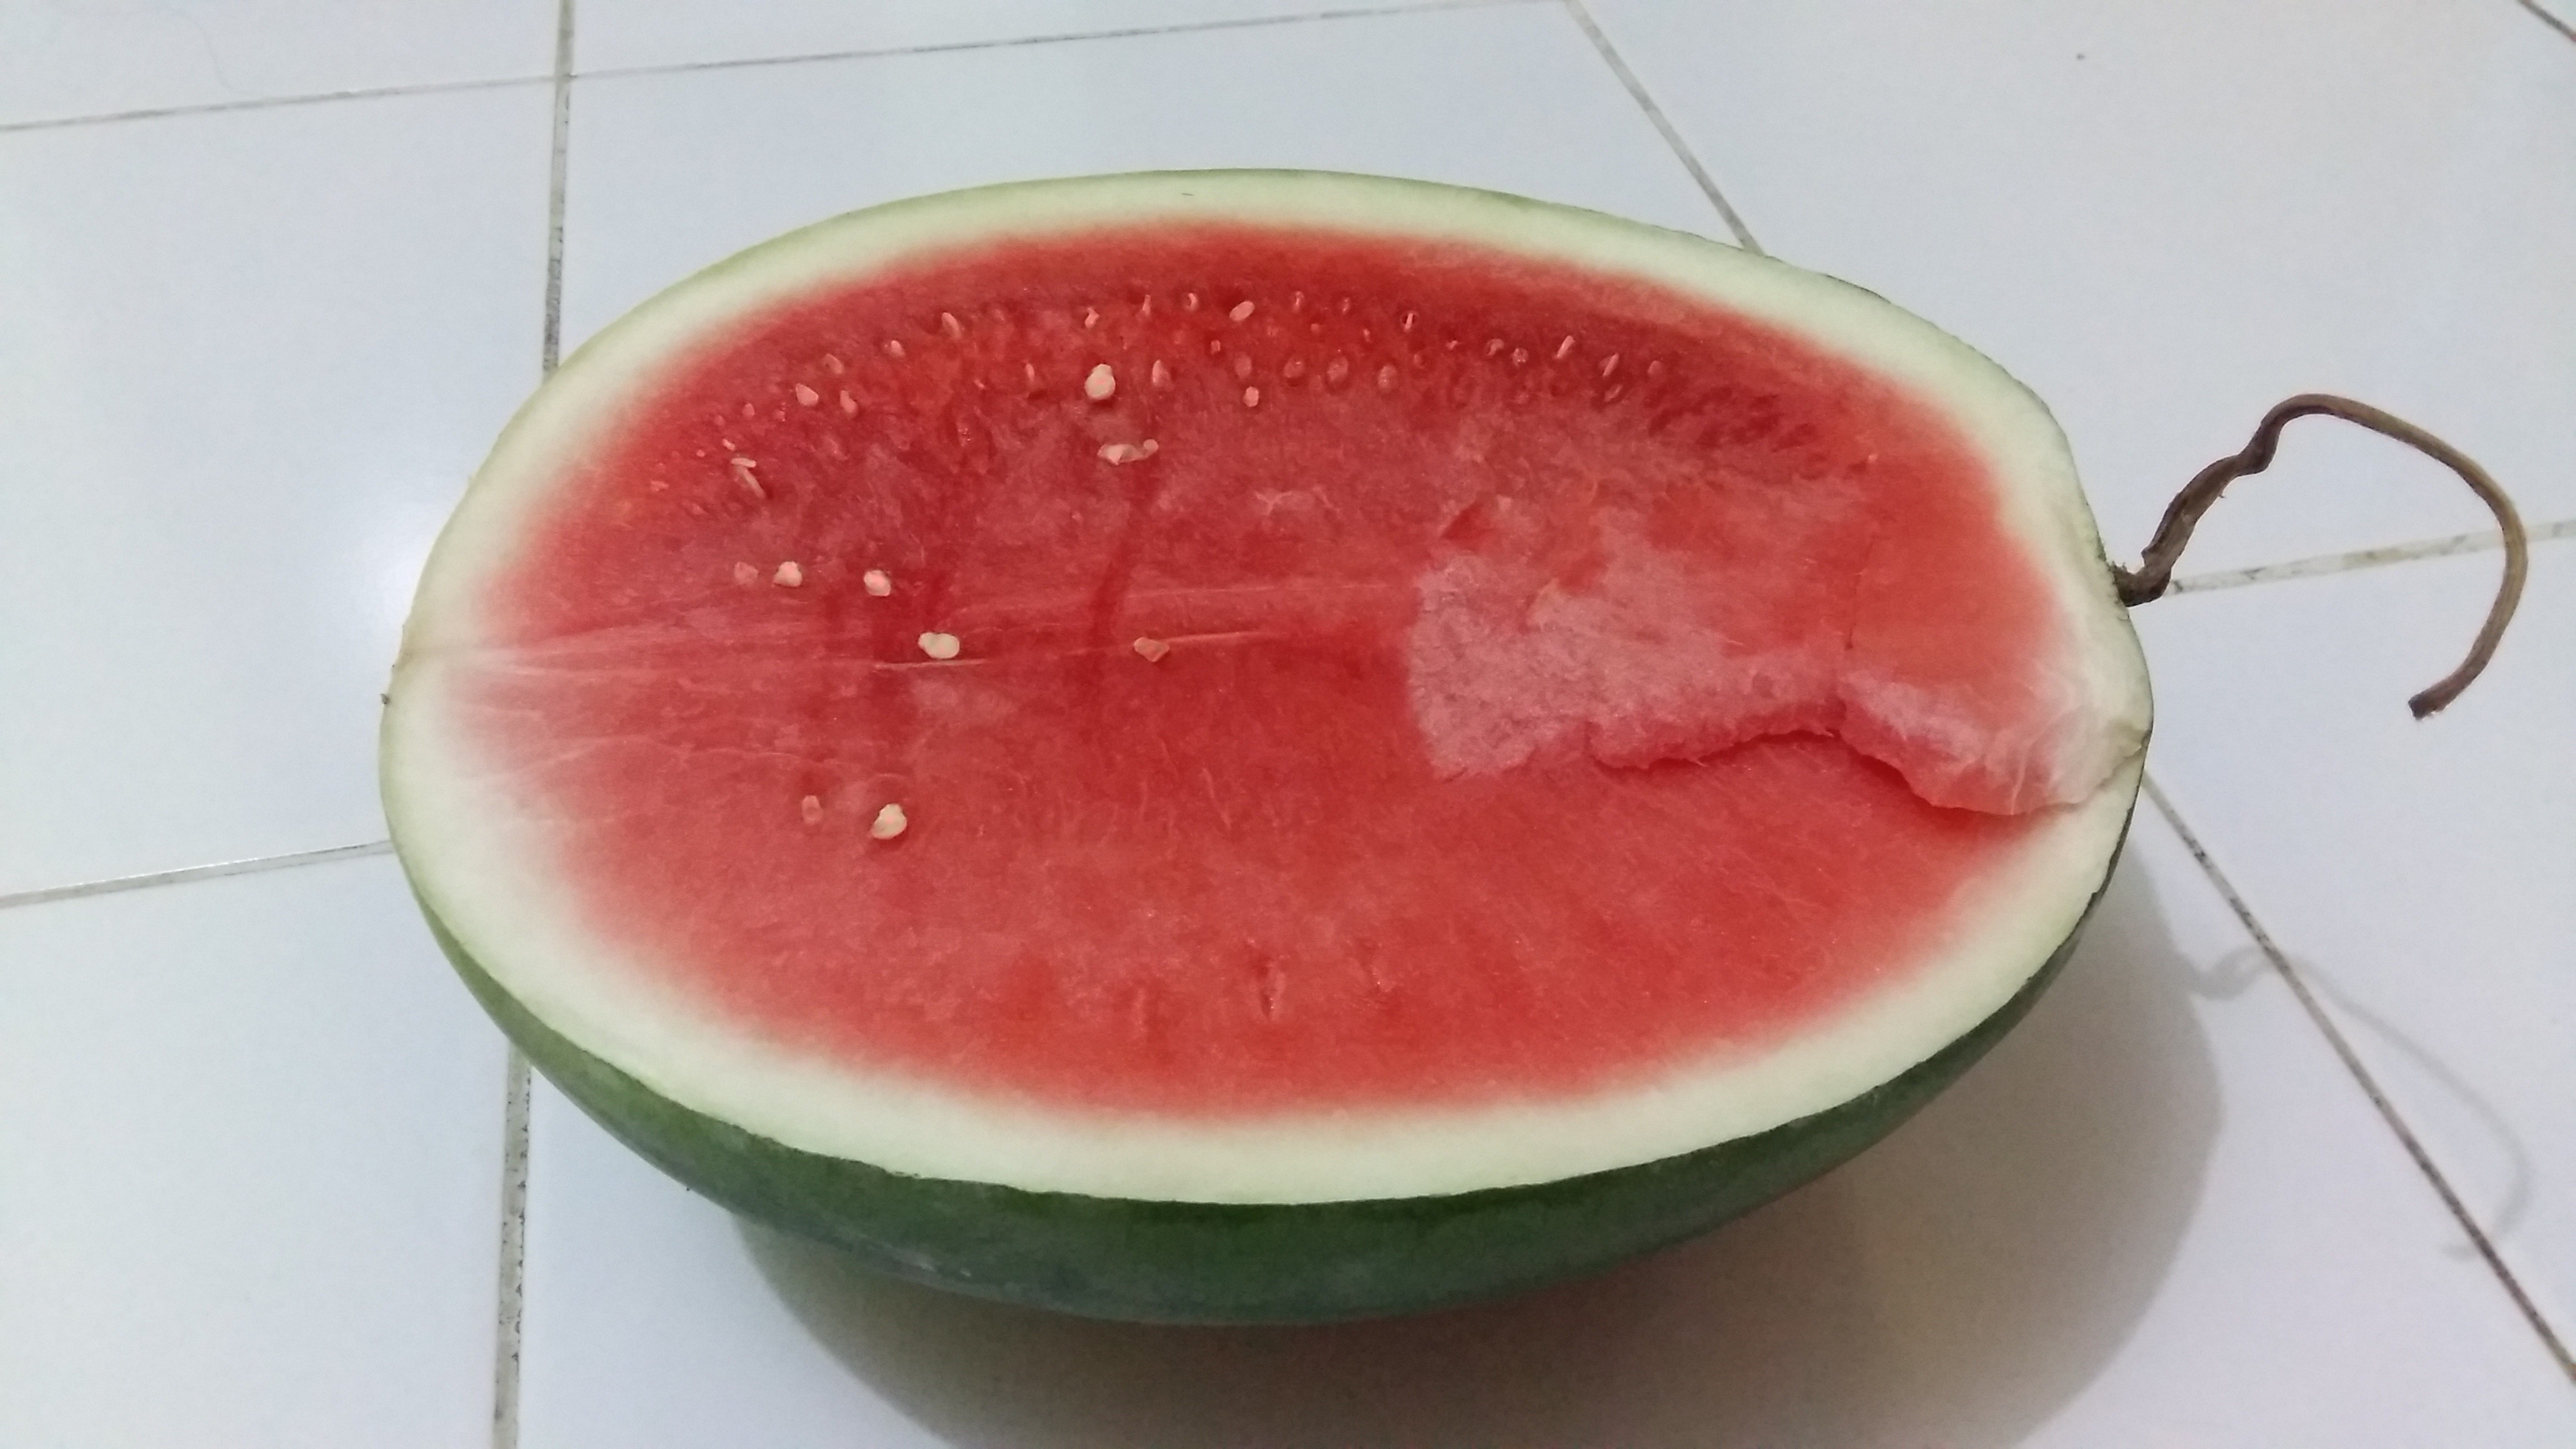 sliced of watermelon